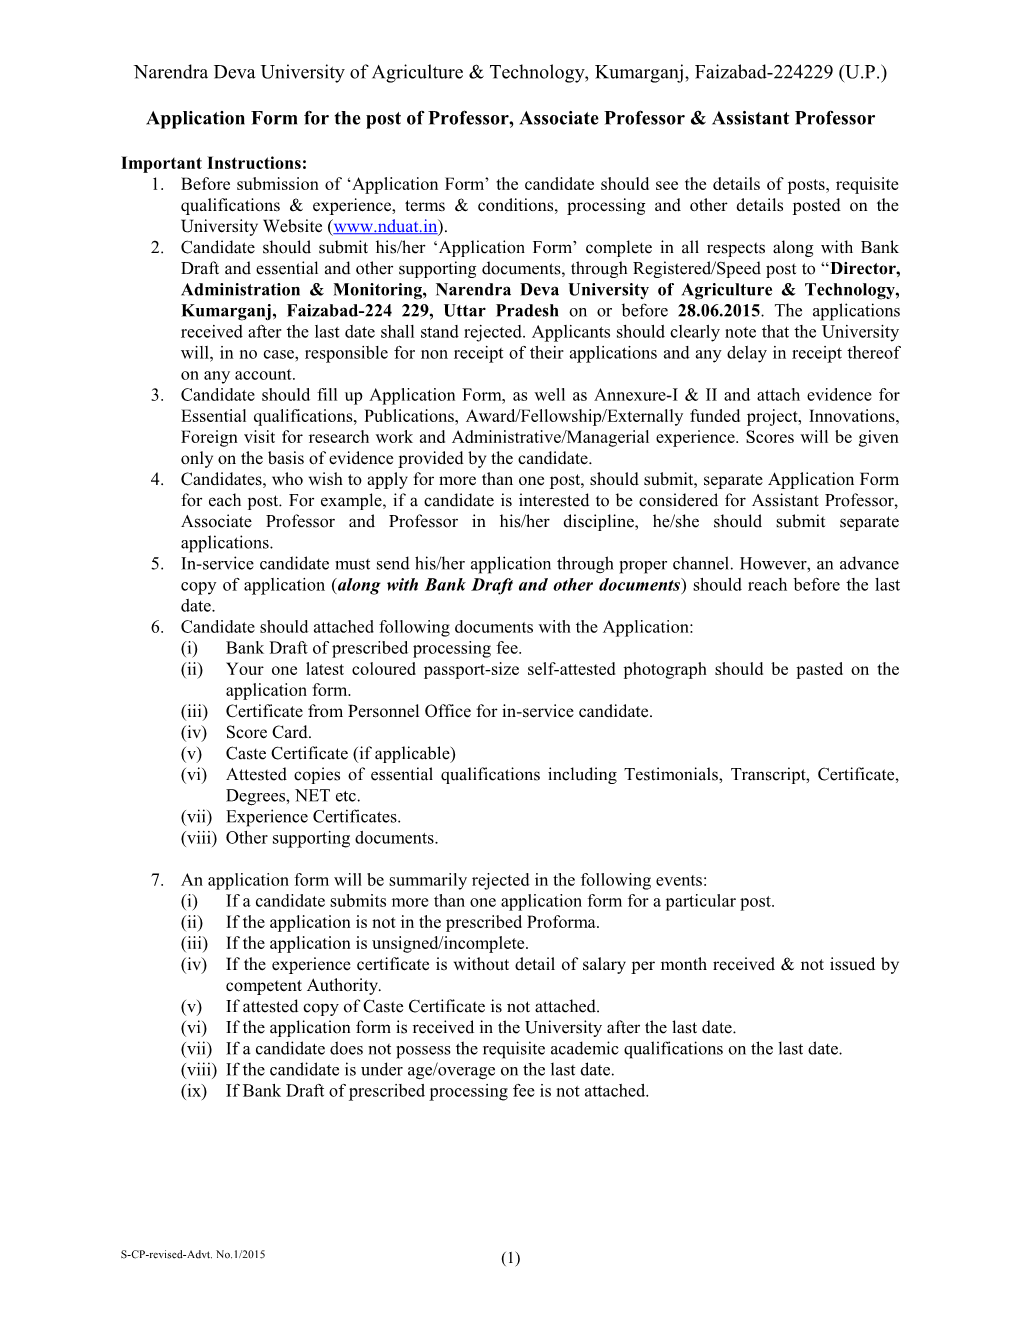 Application Form for the Post of Professor, Associate Professor & Assistant Professor